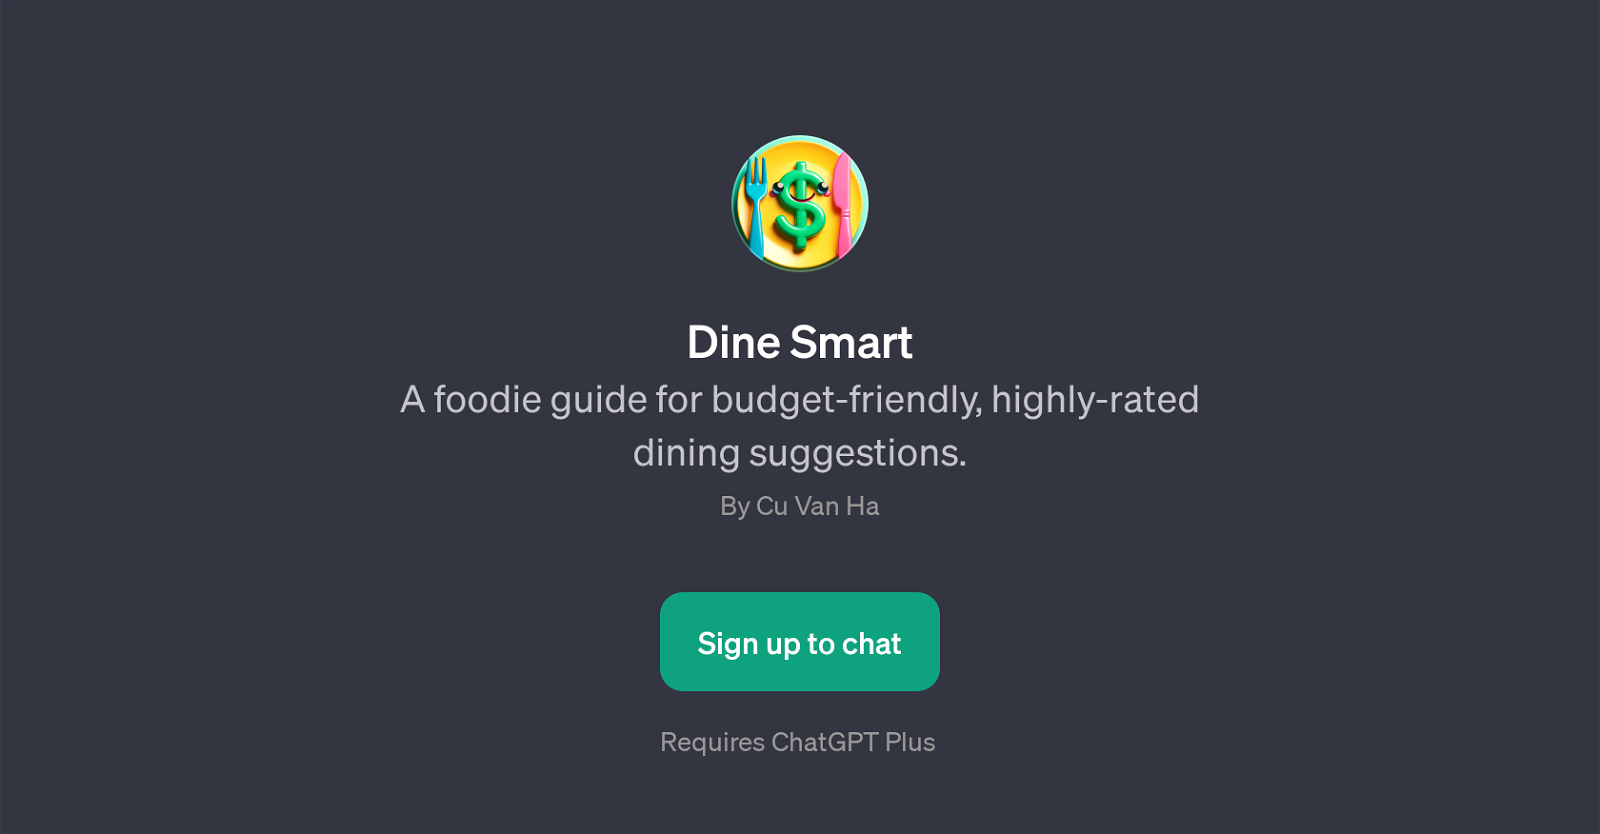 Dine Smart website